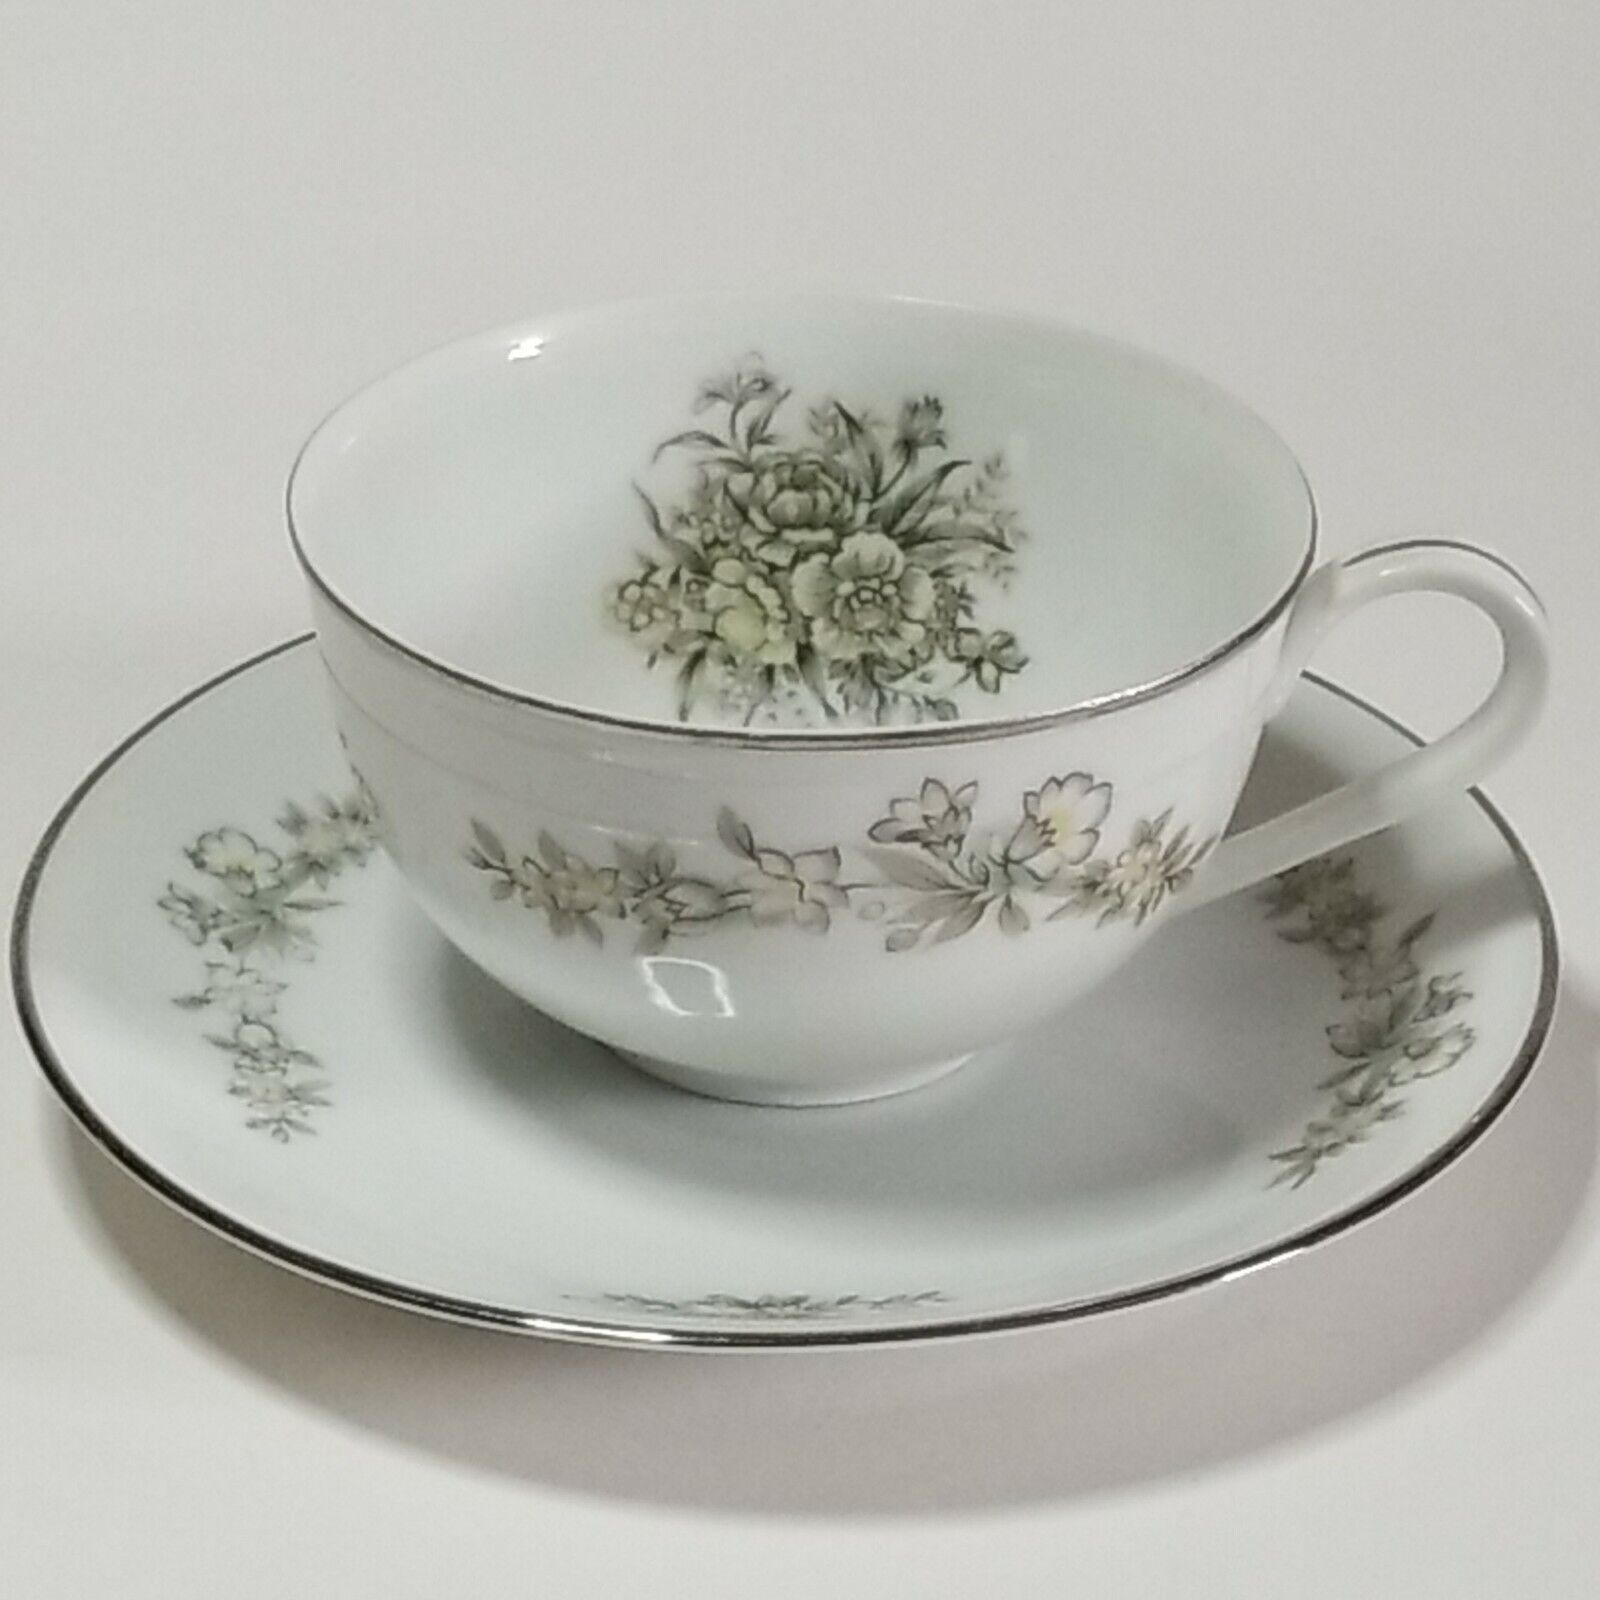 Vintage/Antique Kira Fine China Japan Teacup & Saucer Set w/Gray Floral Daisy